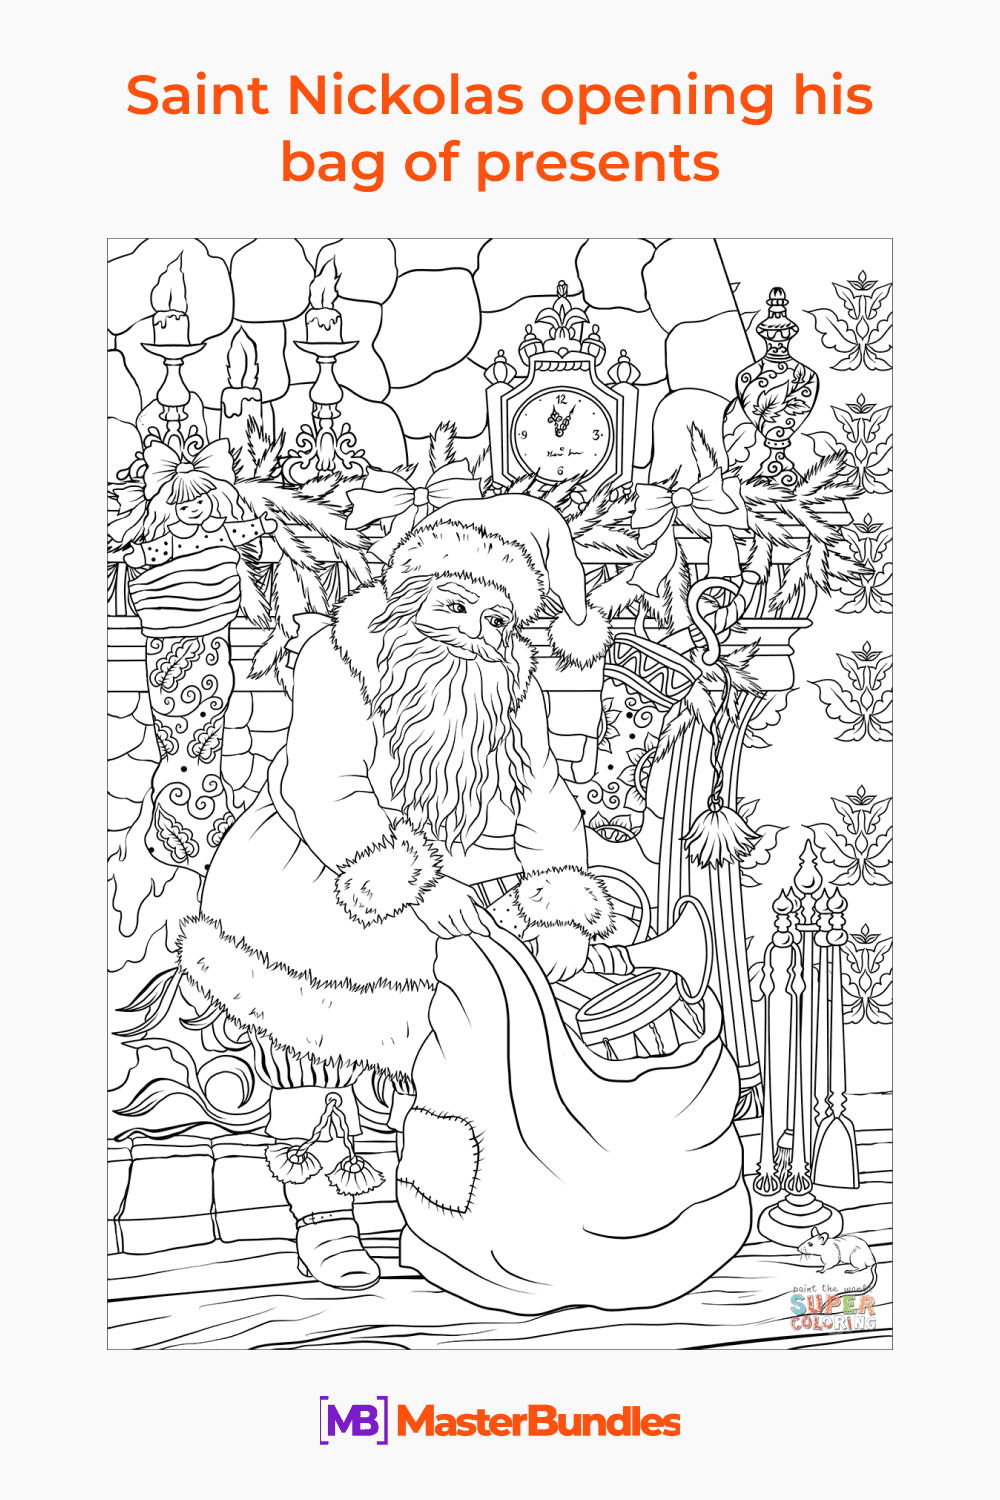 Saint Nickolas opening his bag of presents coloring page pinterest image.